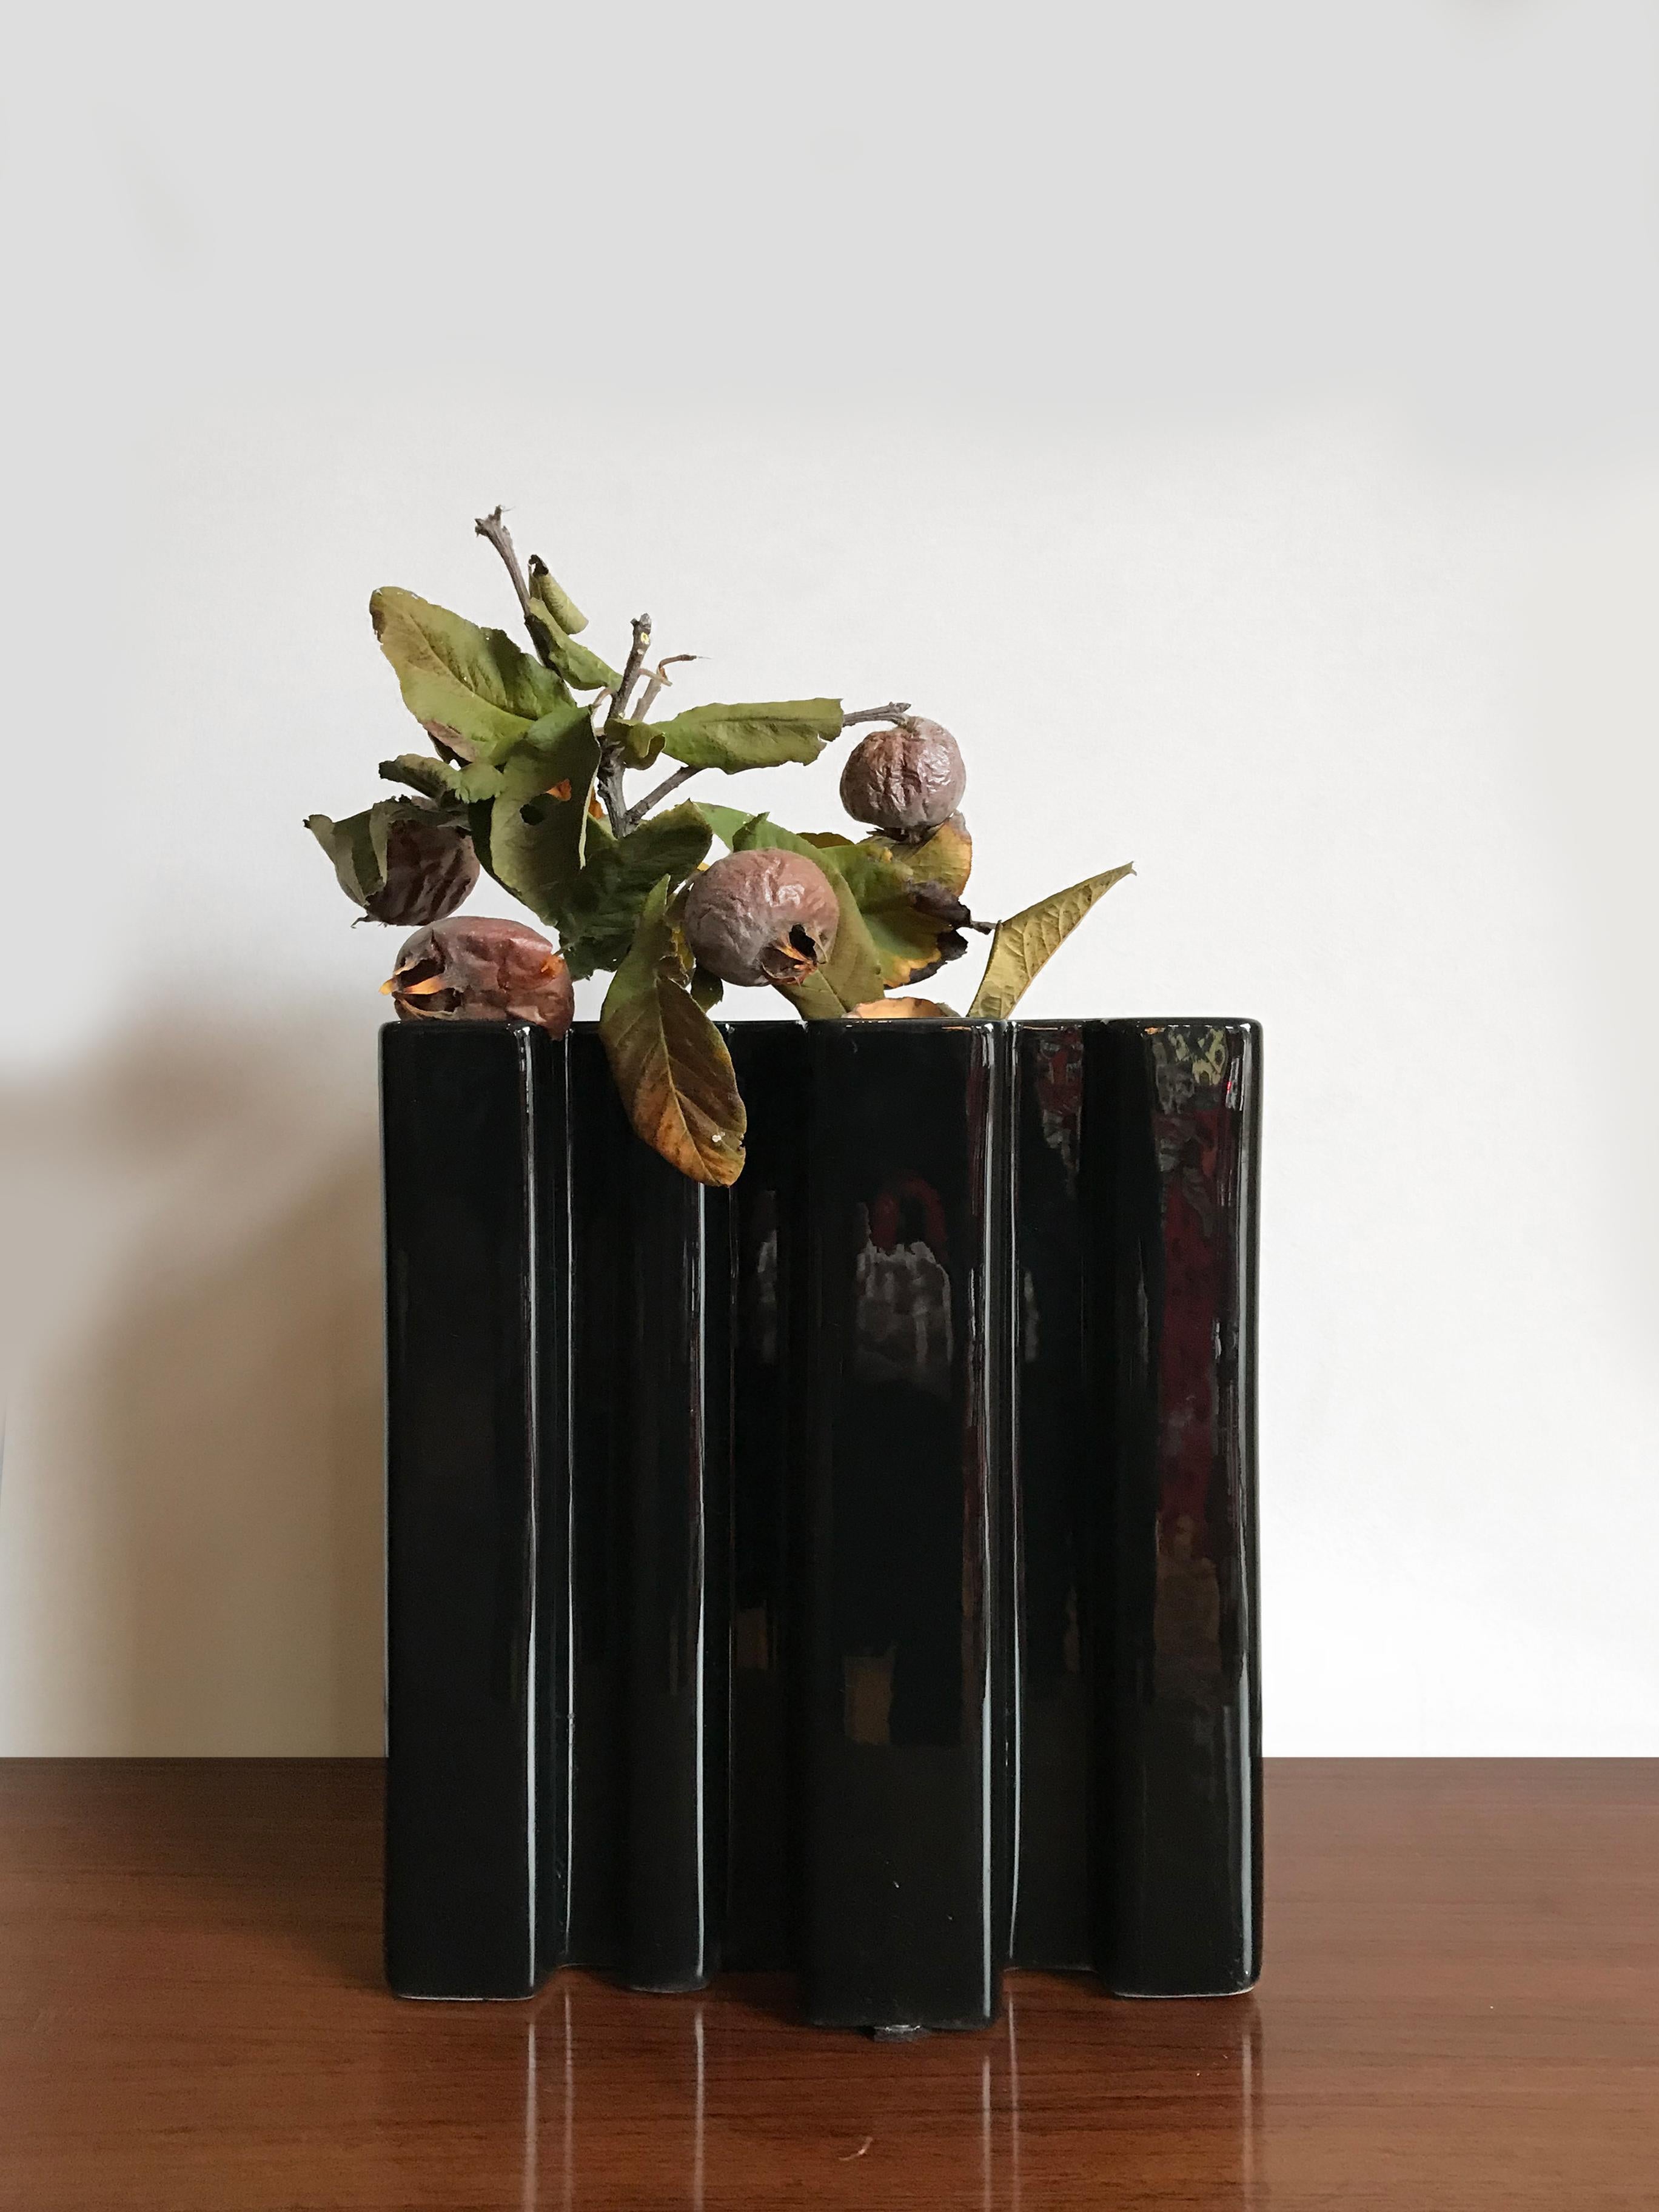 Italian black glazed ceramic vase designed by Angelo Mangiarotti, Superego editions, 2000s
Very good vintage condition.